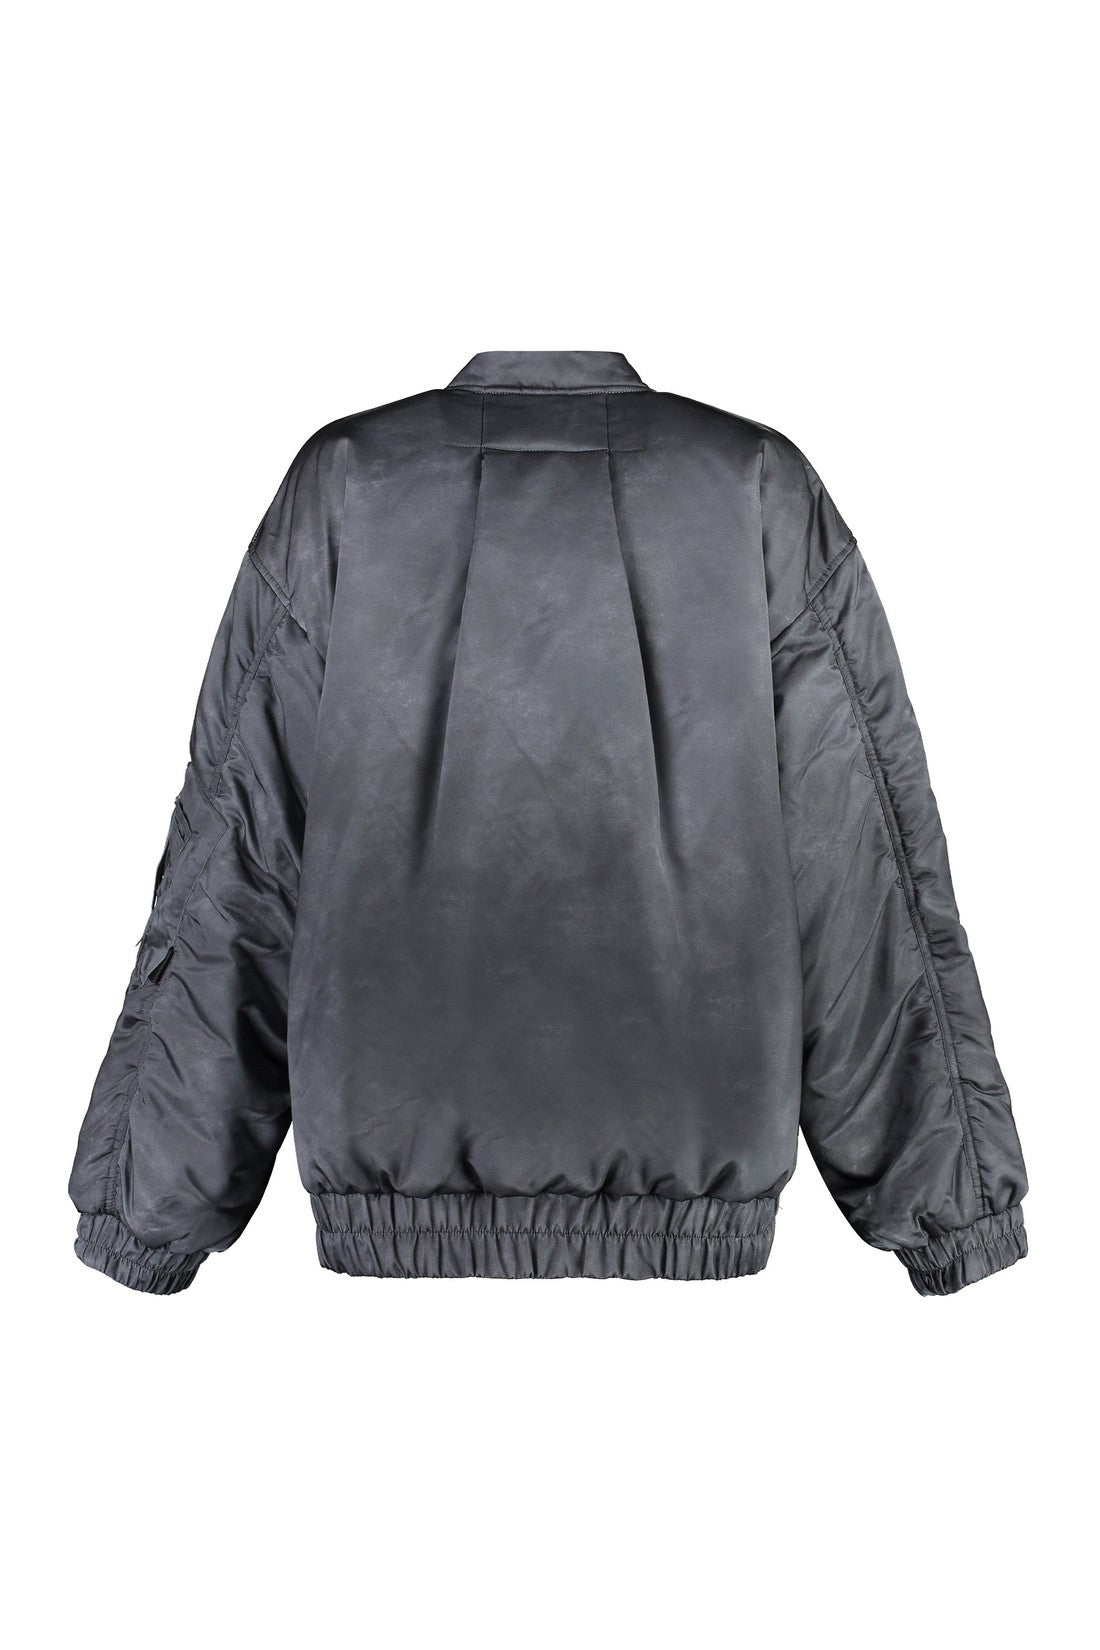 AGOLDE-OUTLET-SALE-SHOREDITCH SKI CLUB X AGOLDE - Nisa nylon bomber jacket-ARCHIVIST